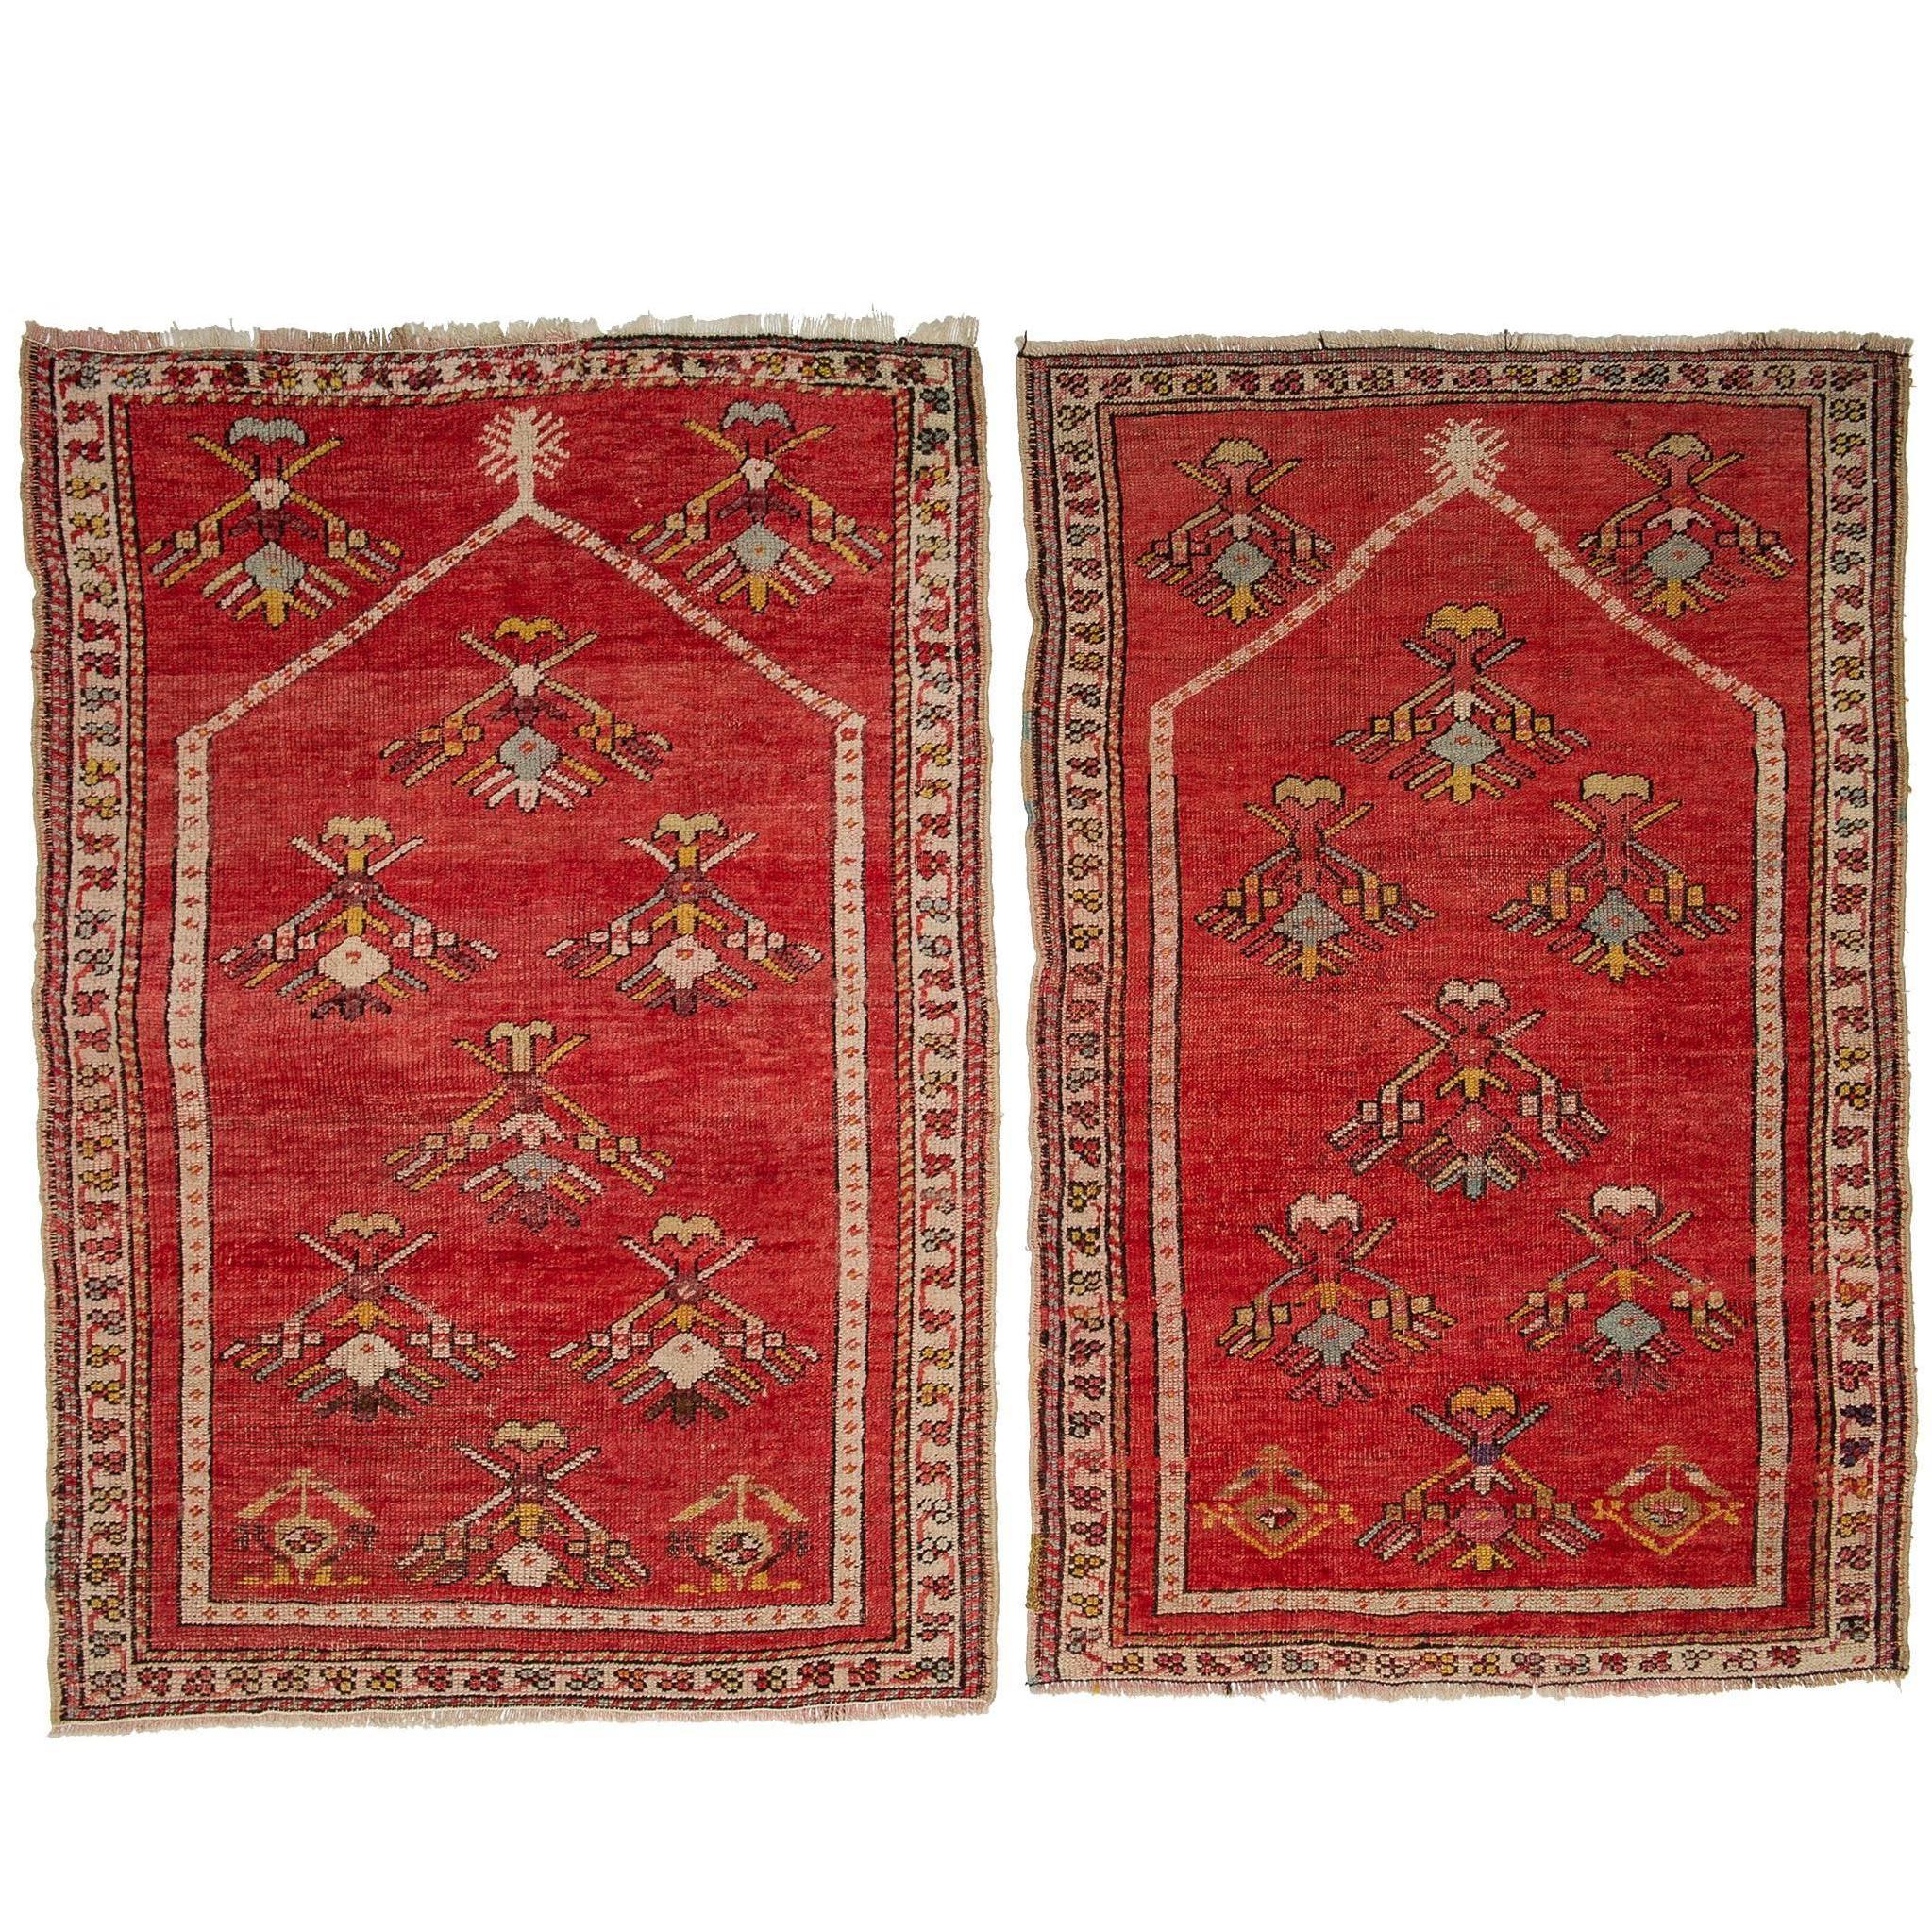  Pair of Antique KIRSHEIR Prayer Bed Side Carpets